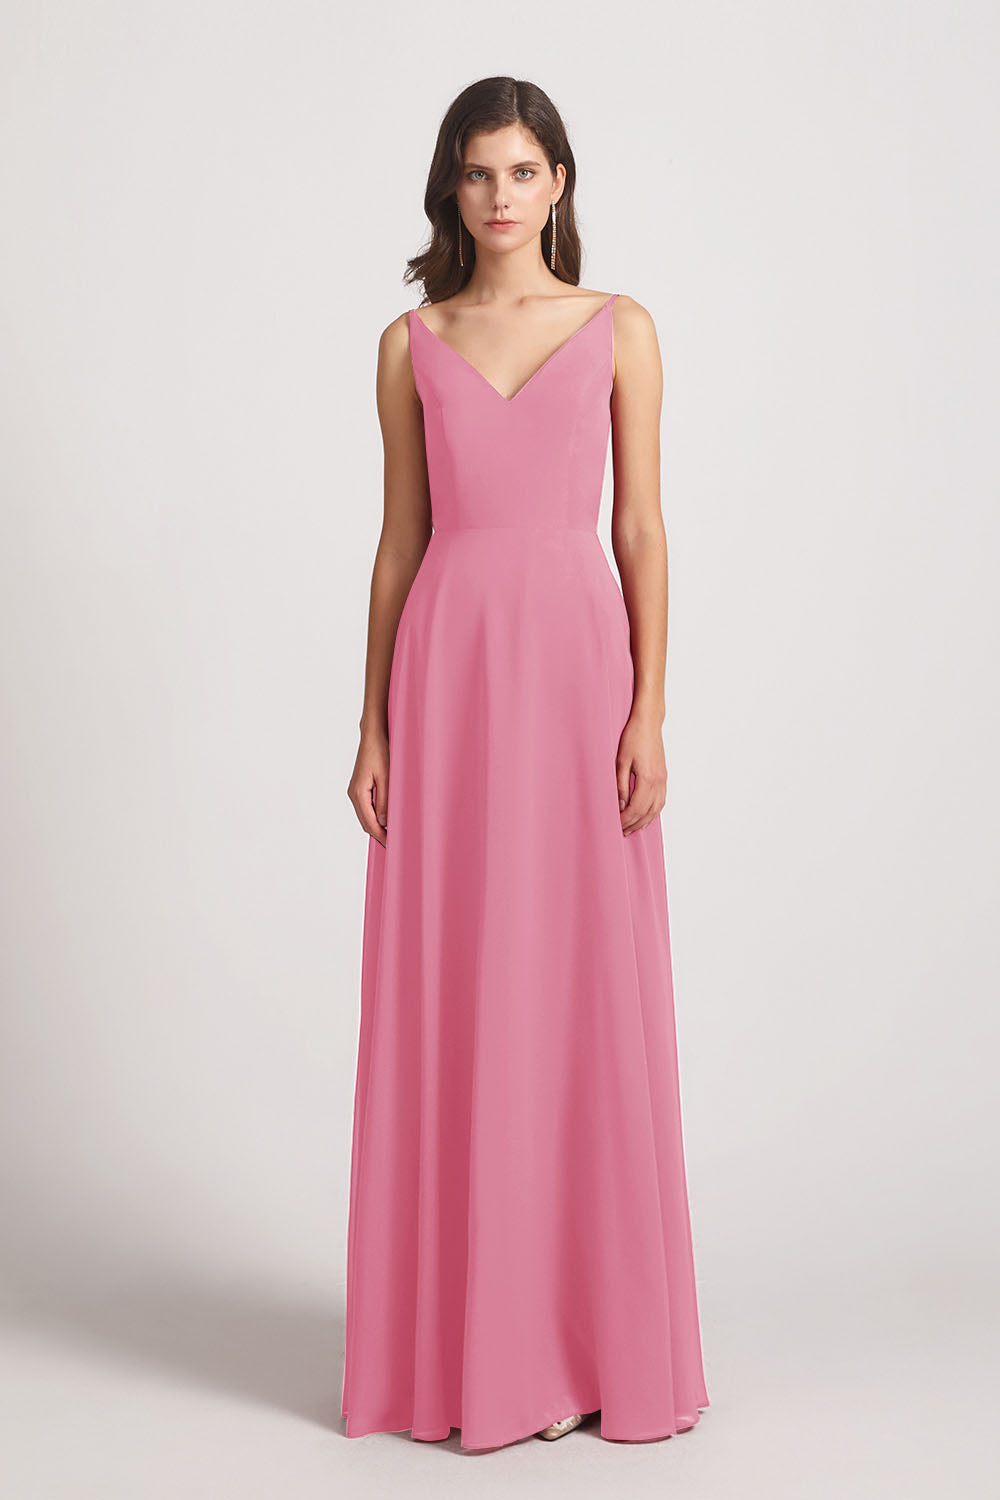 Alfa Bridal Skin Pink V-Neck Spaghetti Straps Chiffon Bridesmaid Dresses With Back Tie (AF0002)